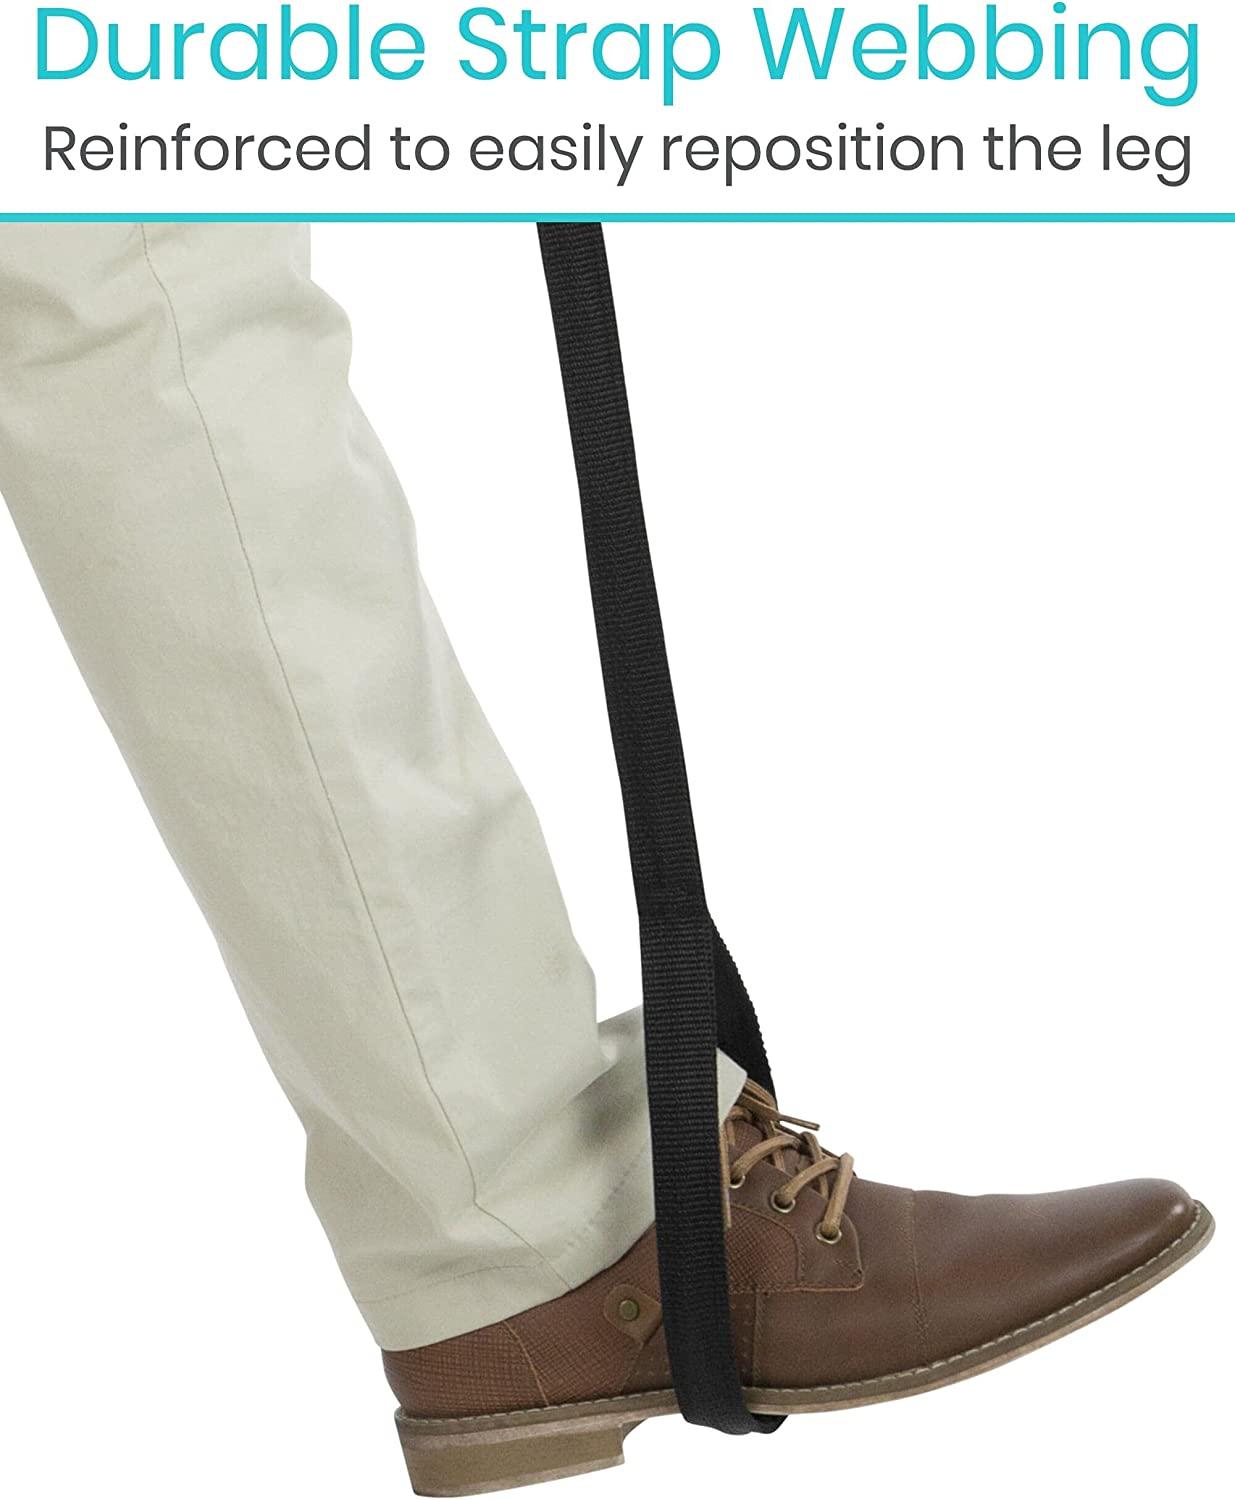 LYUMO Nylon Leg Lifter Strap With Foot Strip Mobility Aids Disability  Elderly 